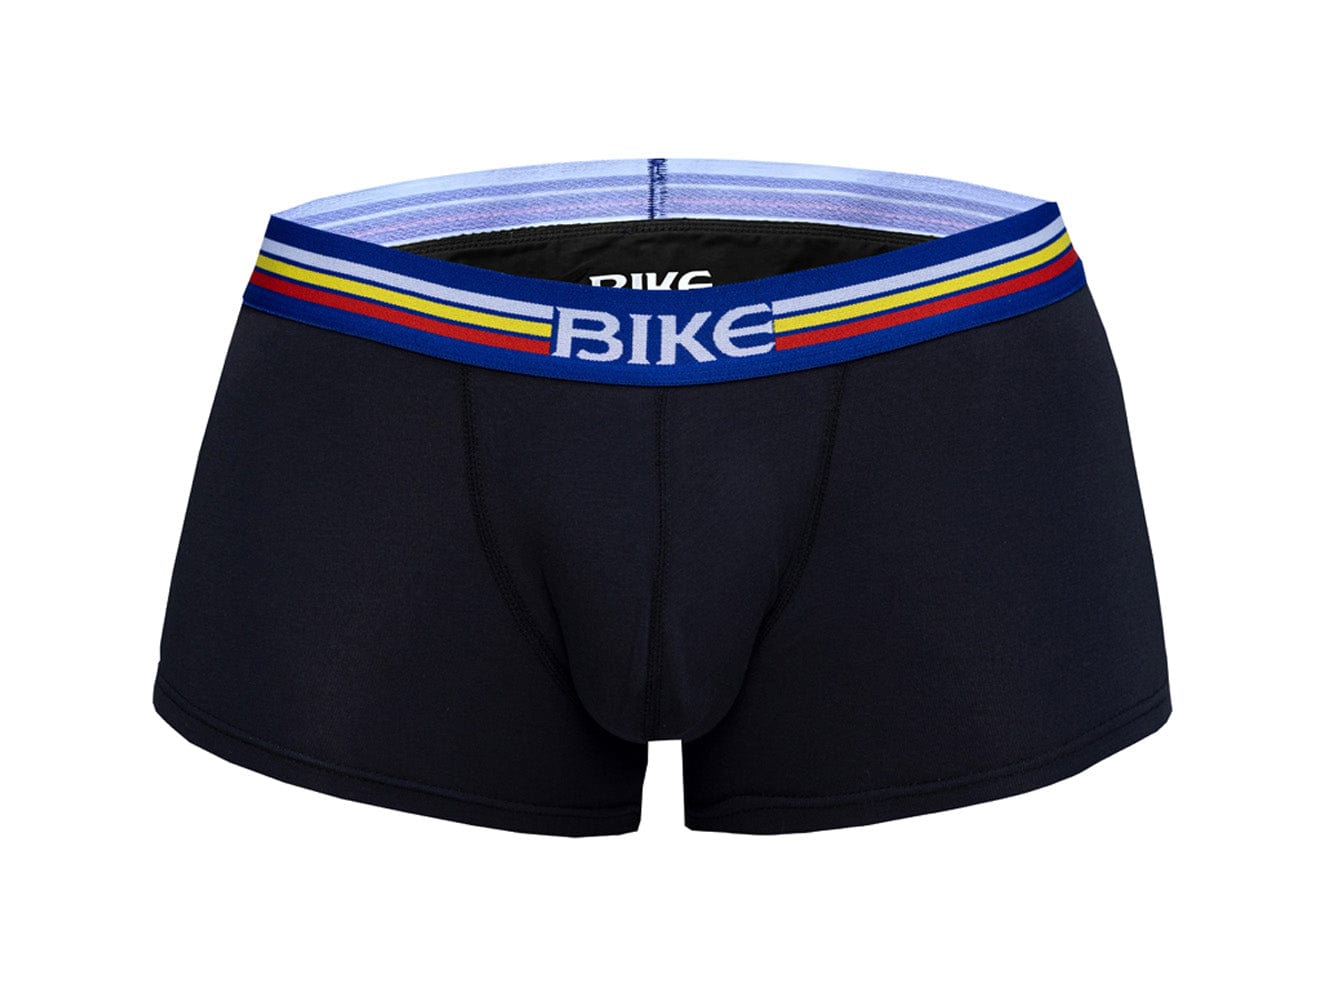 Black Bike Athletic underwear trunk